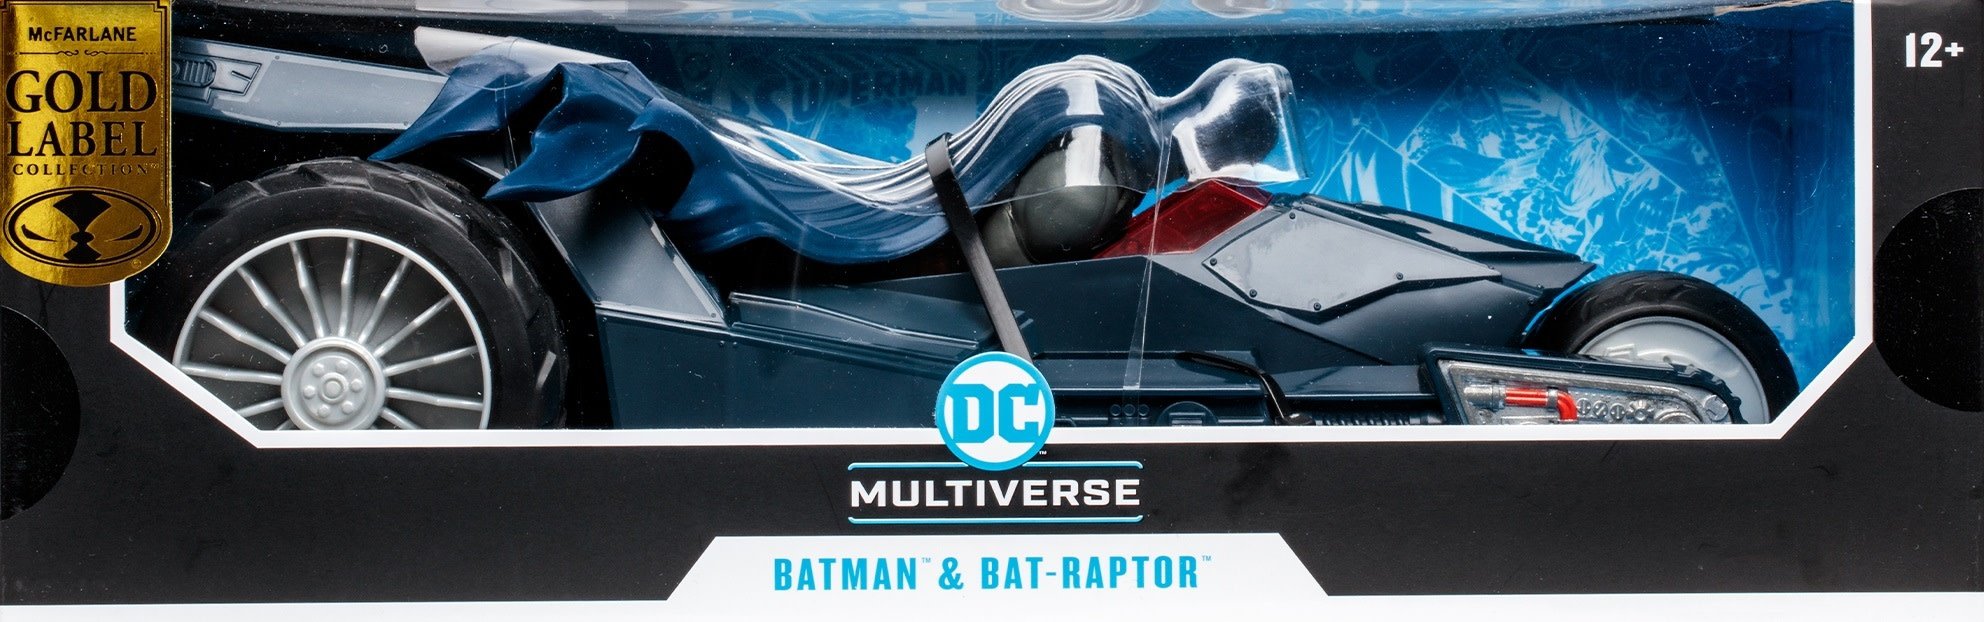 McFarlane Toys DC Multiverse Vehicles - 7" Figures (Bat Raptor/Modern Batman)